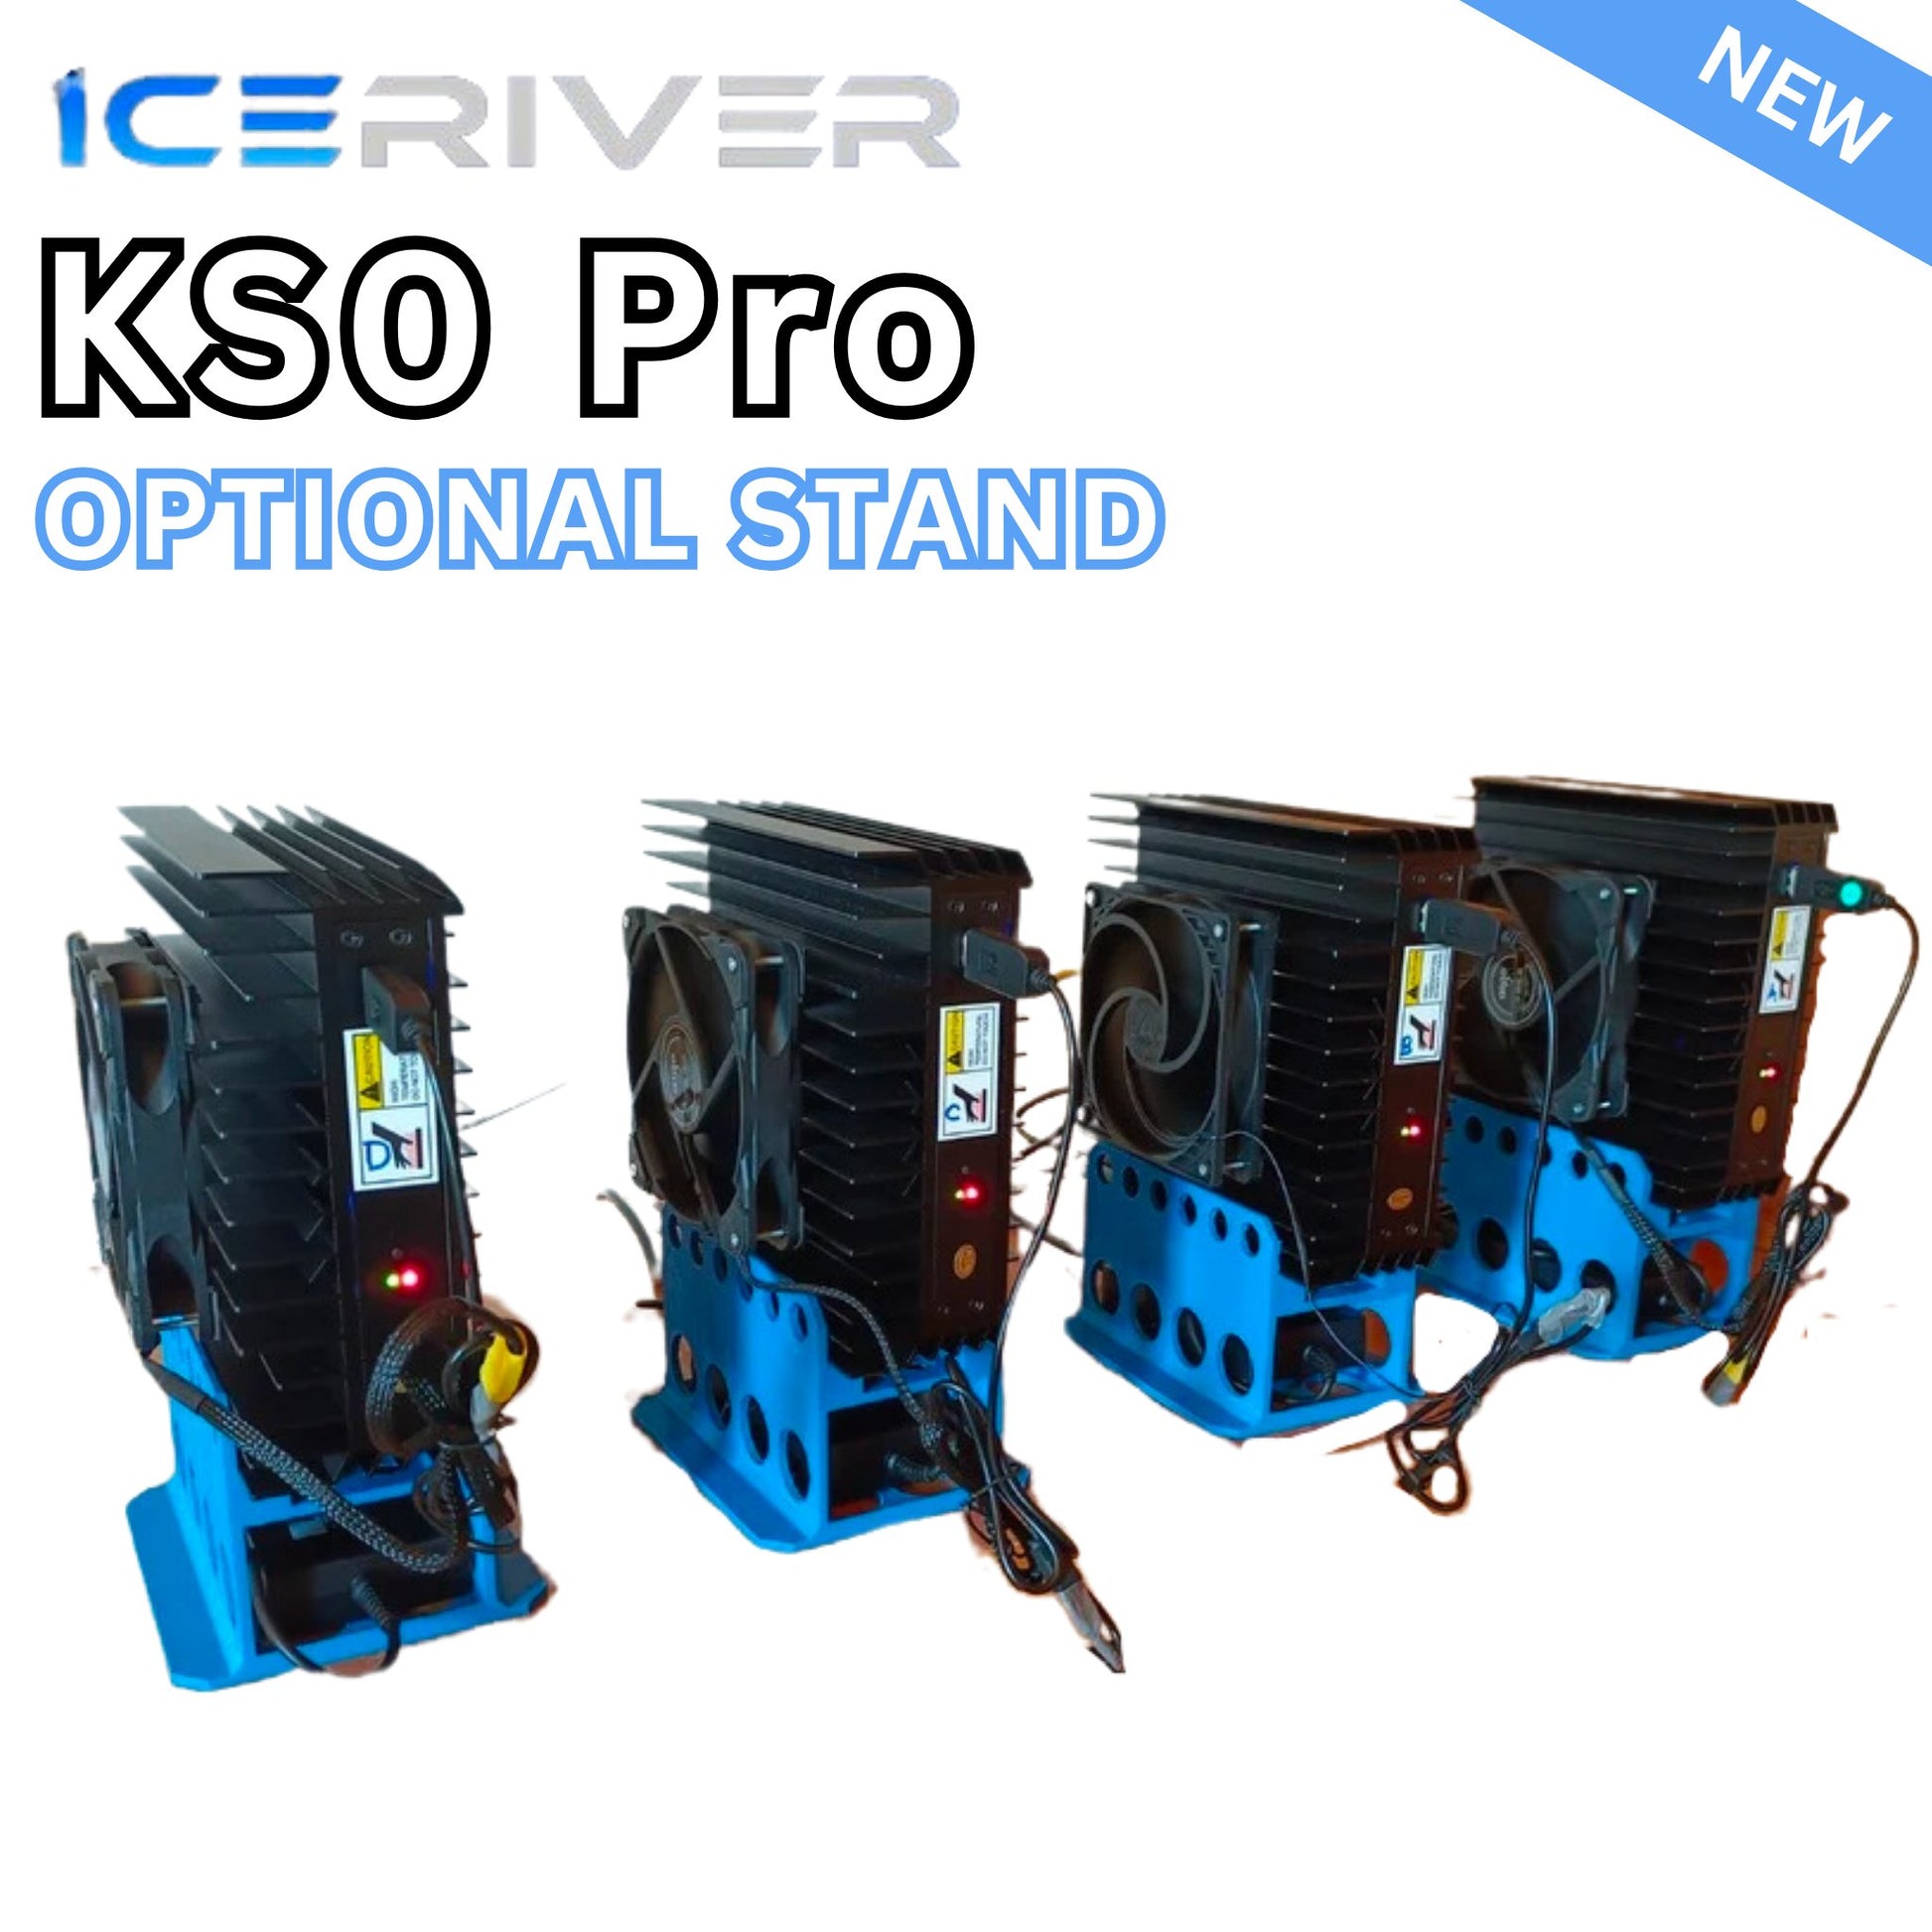 ICERIVER KS0 PRO OverClock Kit - Nakamoto Mining LTD.